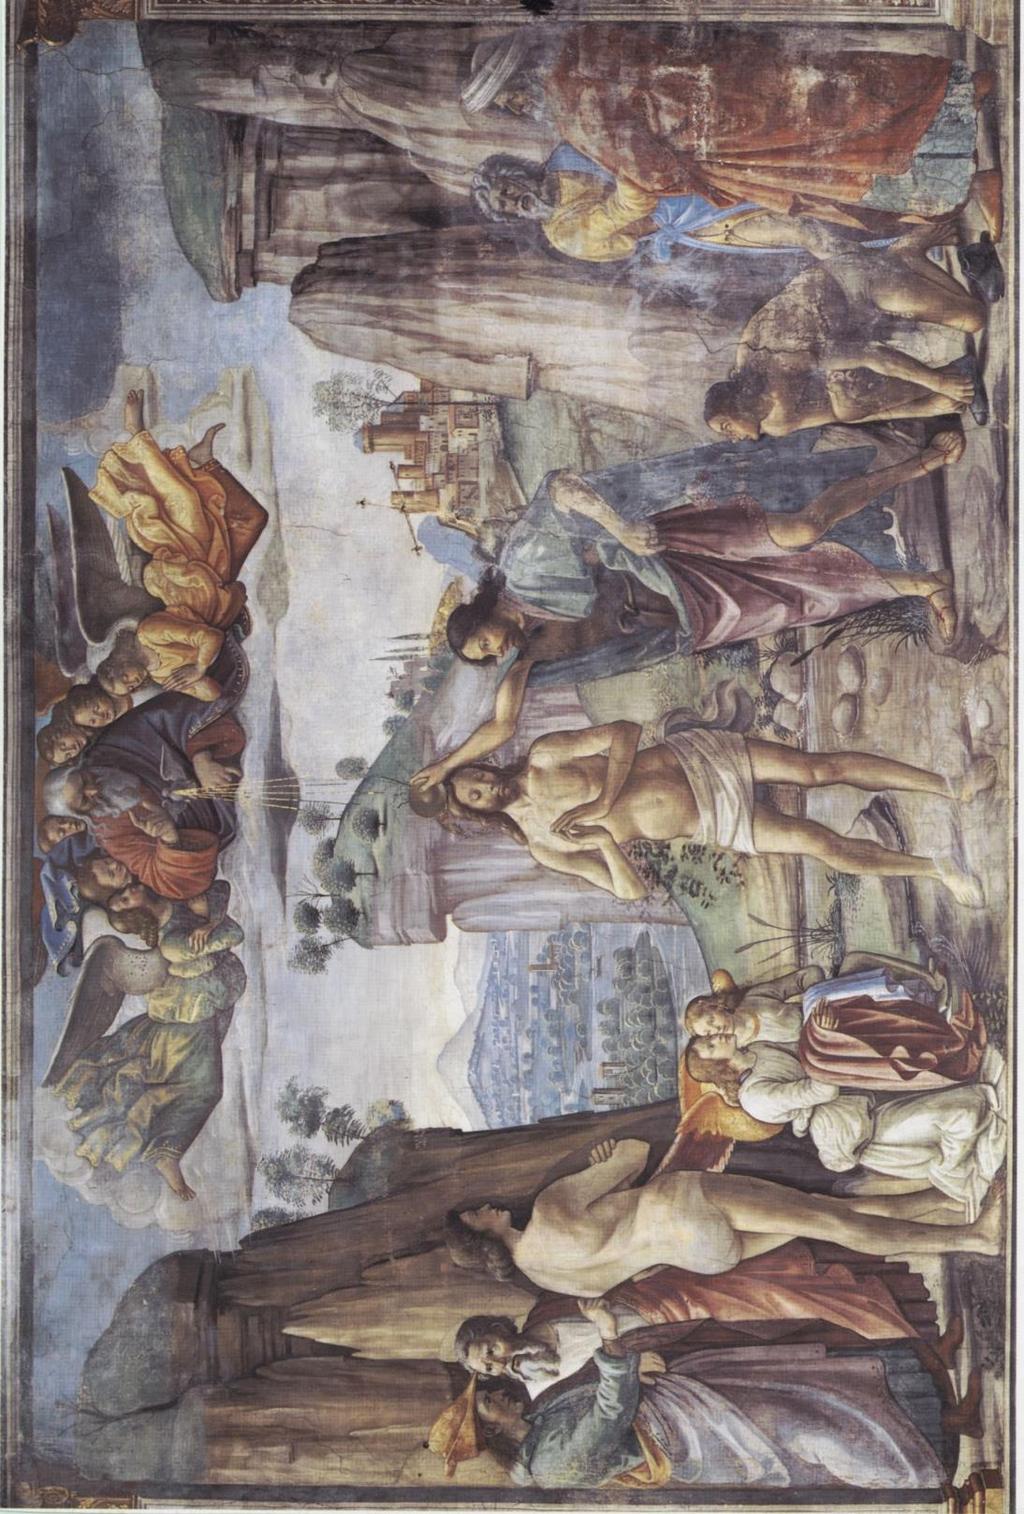 Plate 22: Domenico Bigordi called Ghirlandaio, and workshop, Baptism of Christ, third